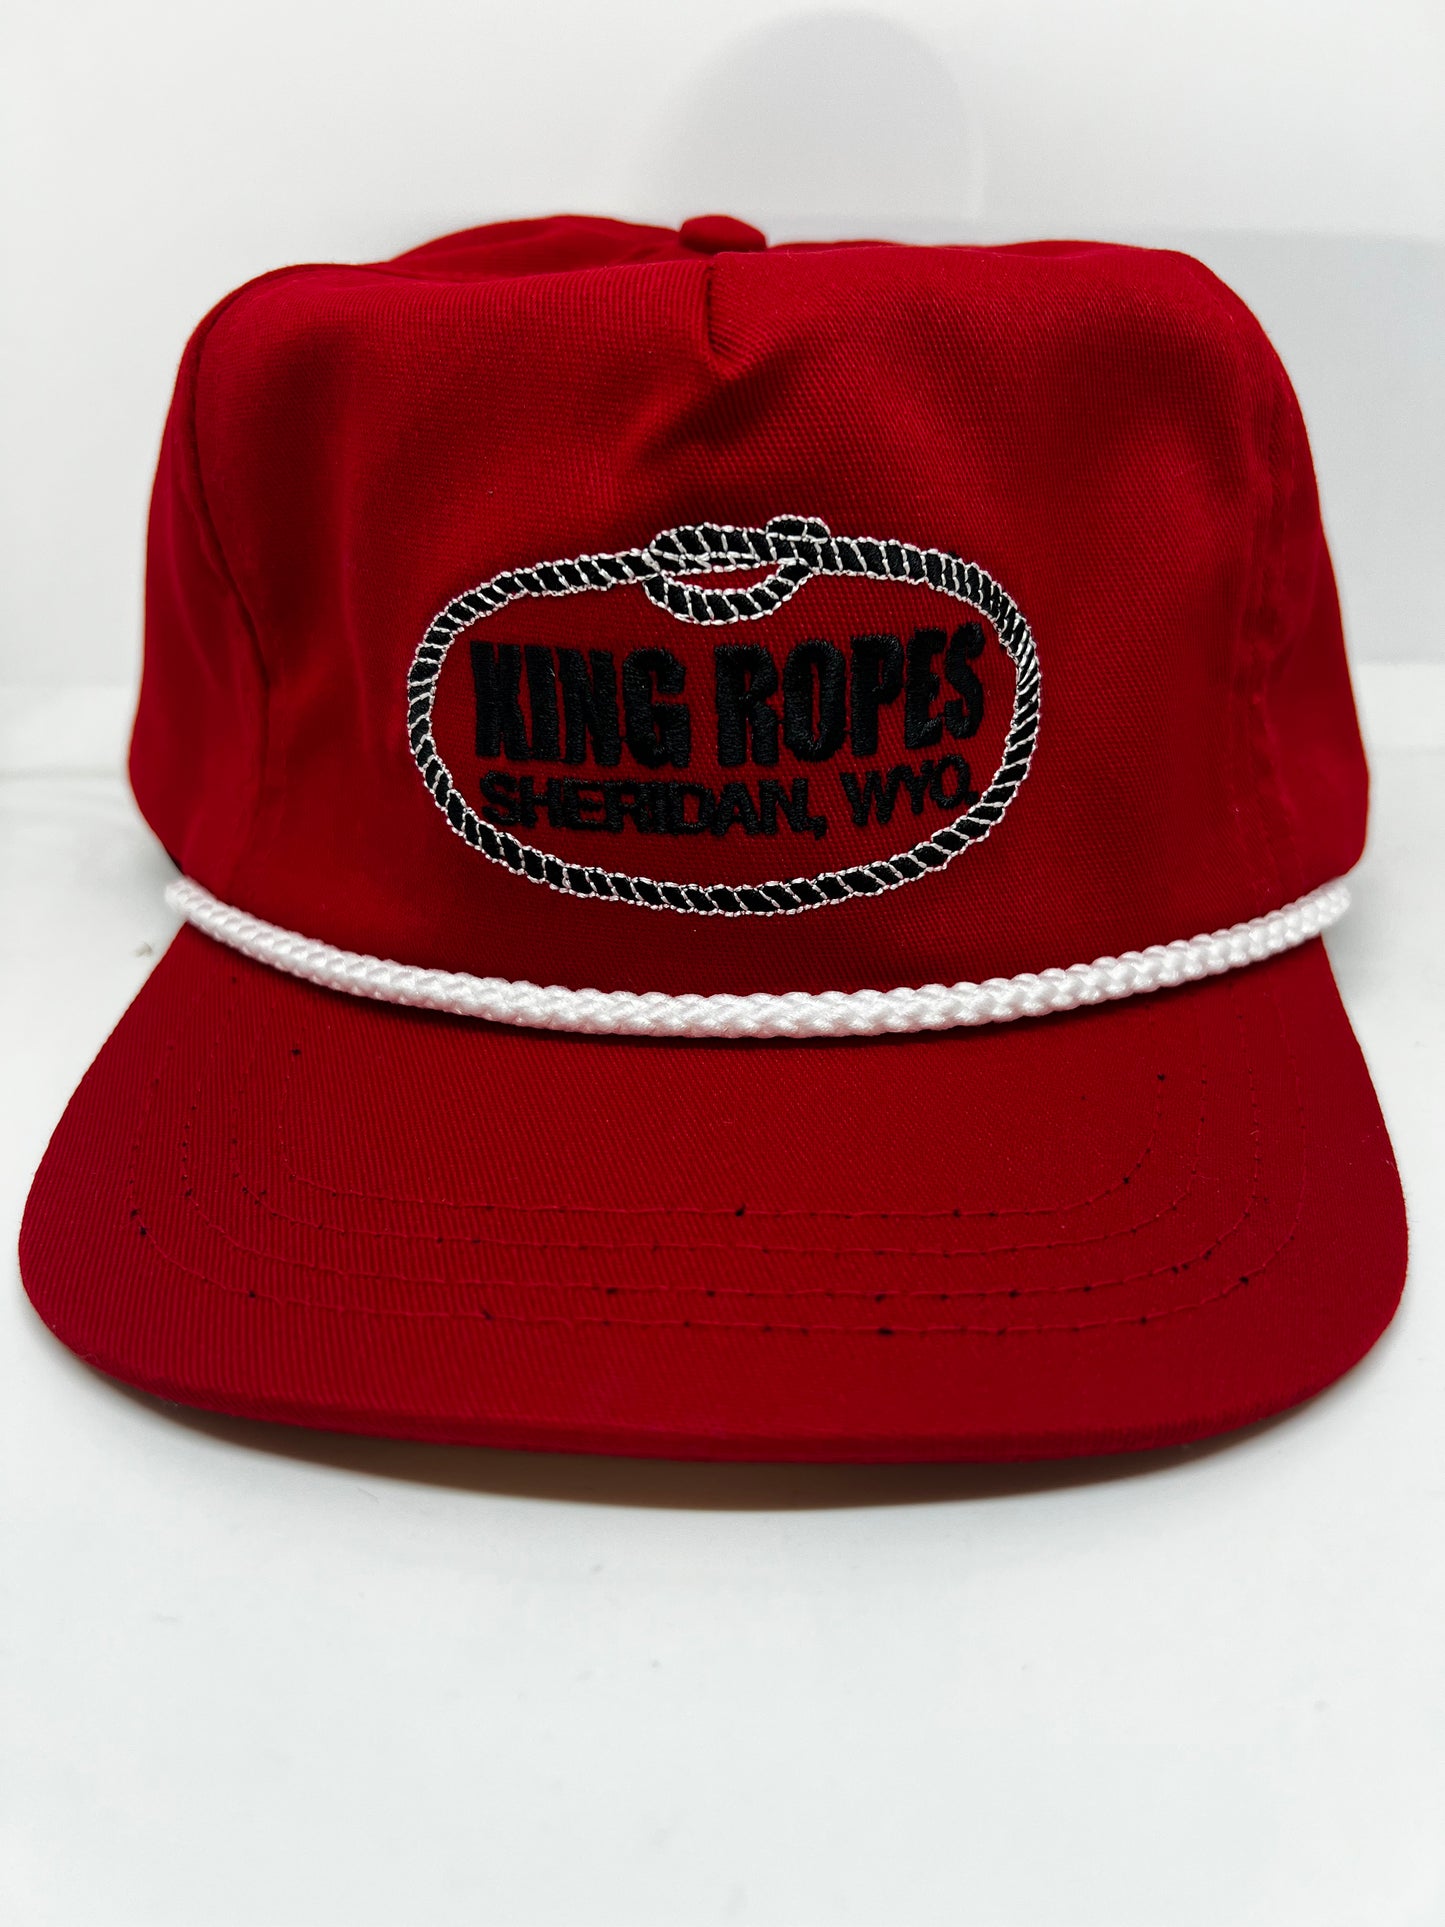 King Ropes Caps